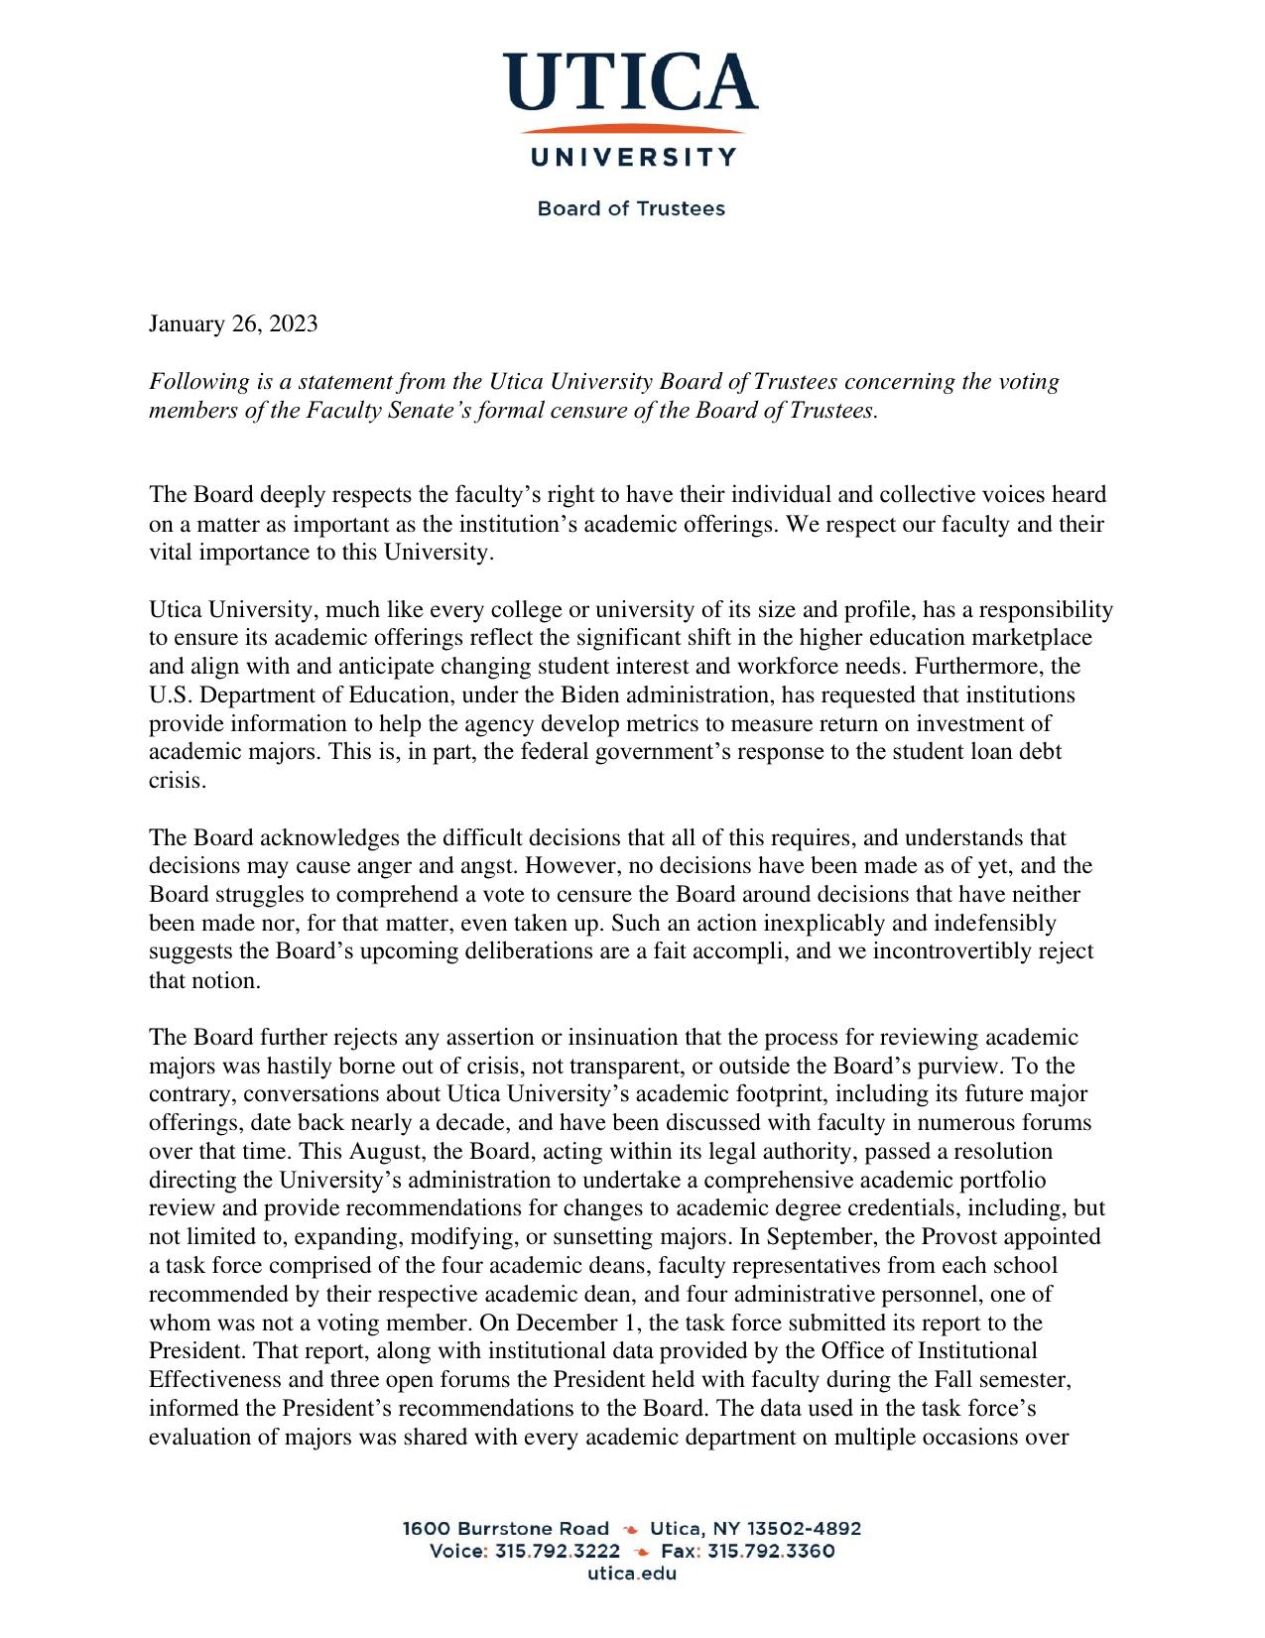 Utica University response to censure